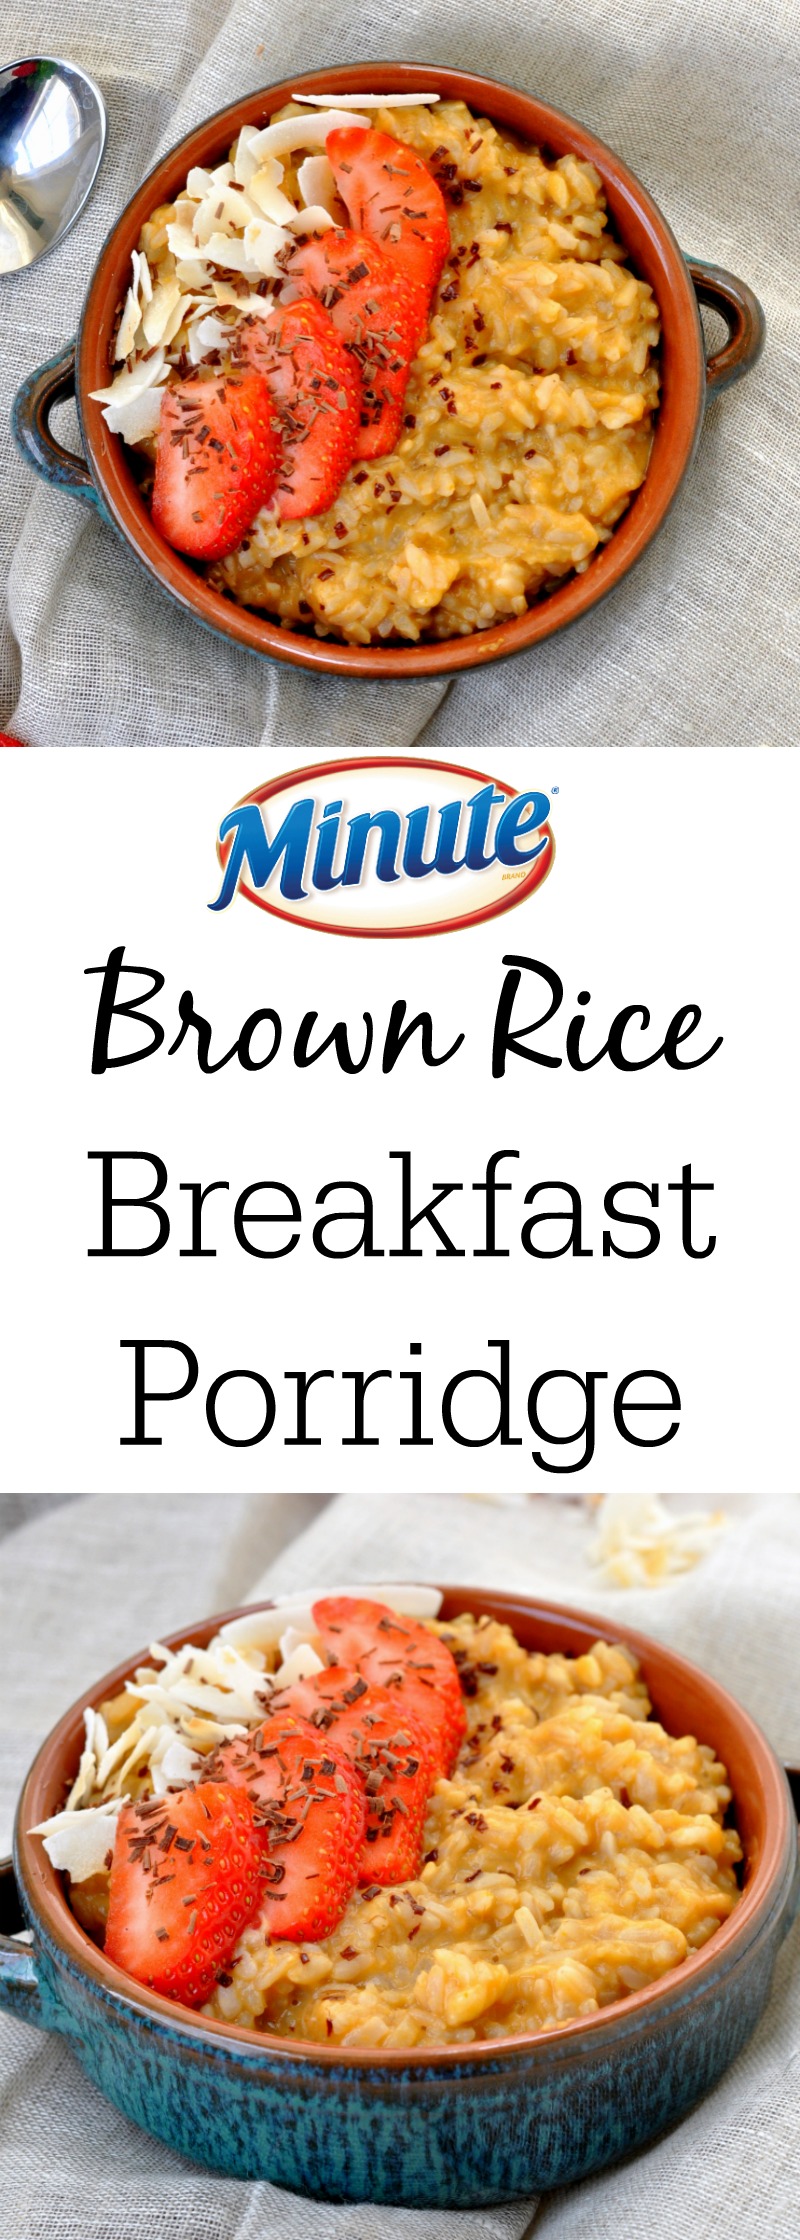 Brown Rice Breakfast Porridge Photo Collage Logo